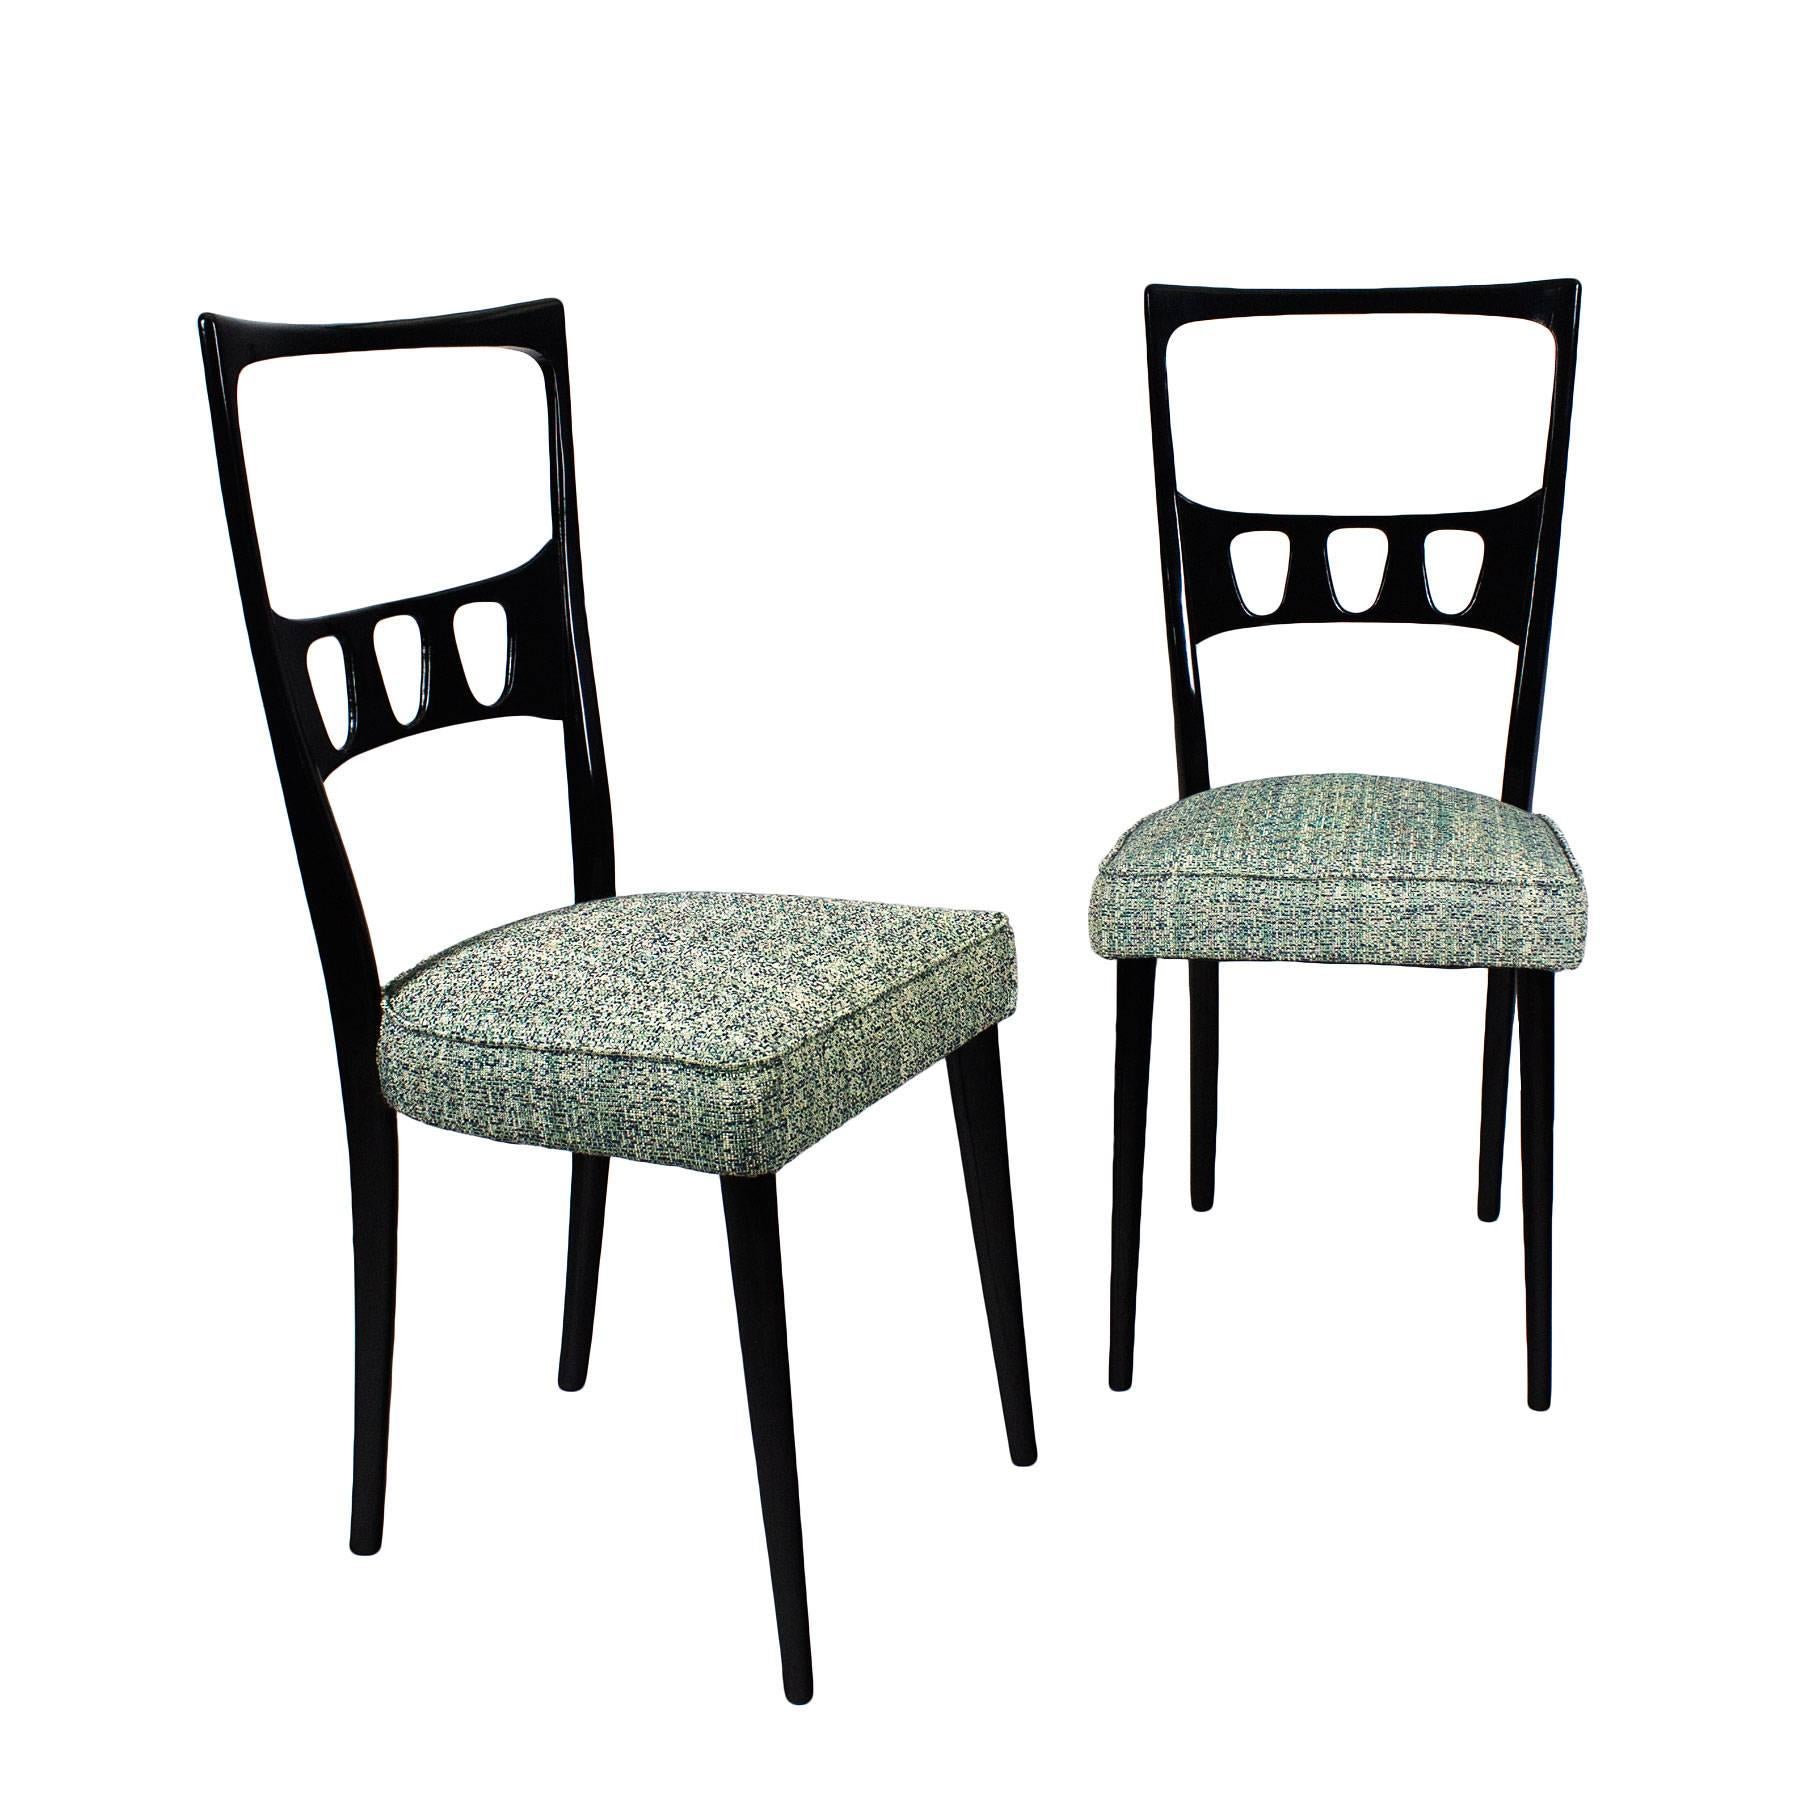 Pair of Mid-Century Modern Chairs, School of Turin, Beech, Fabric - Italy